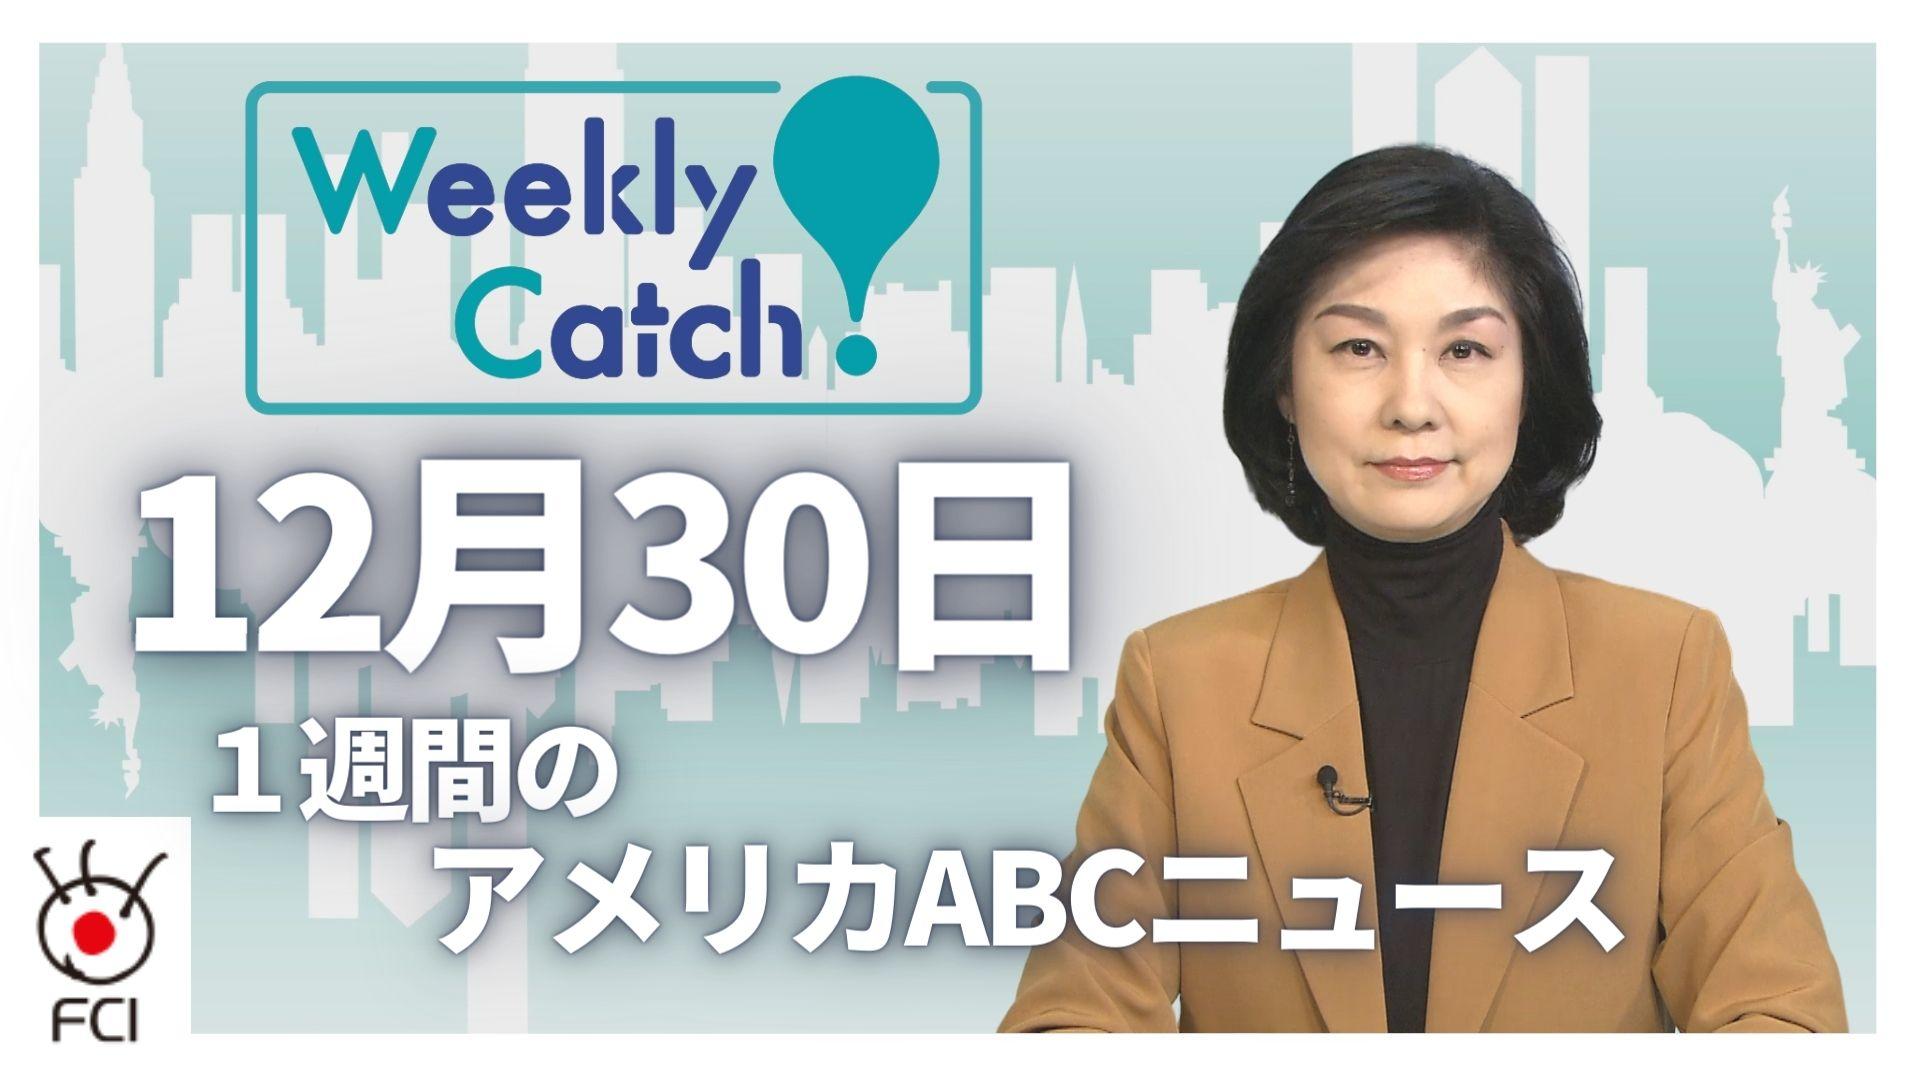 12月30日 Weekly Catch!